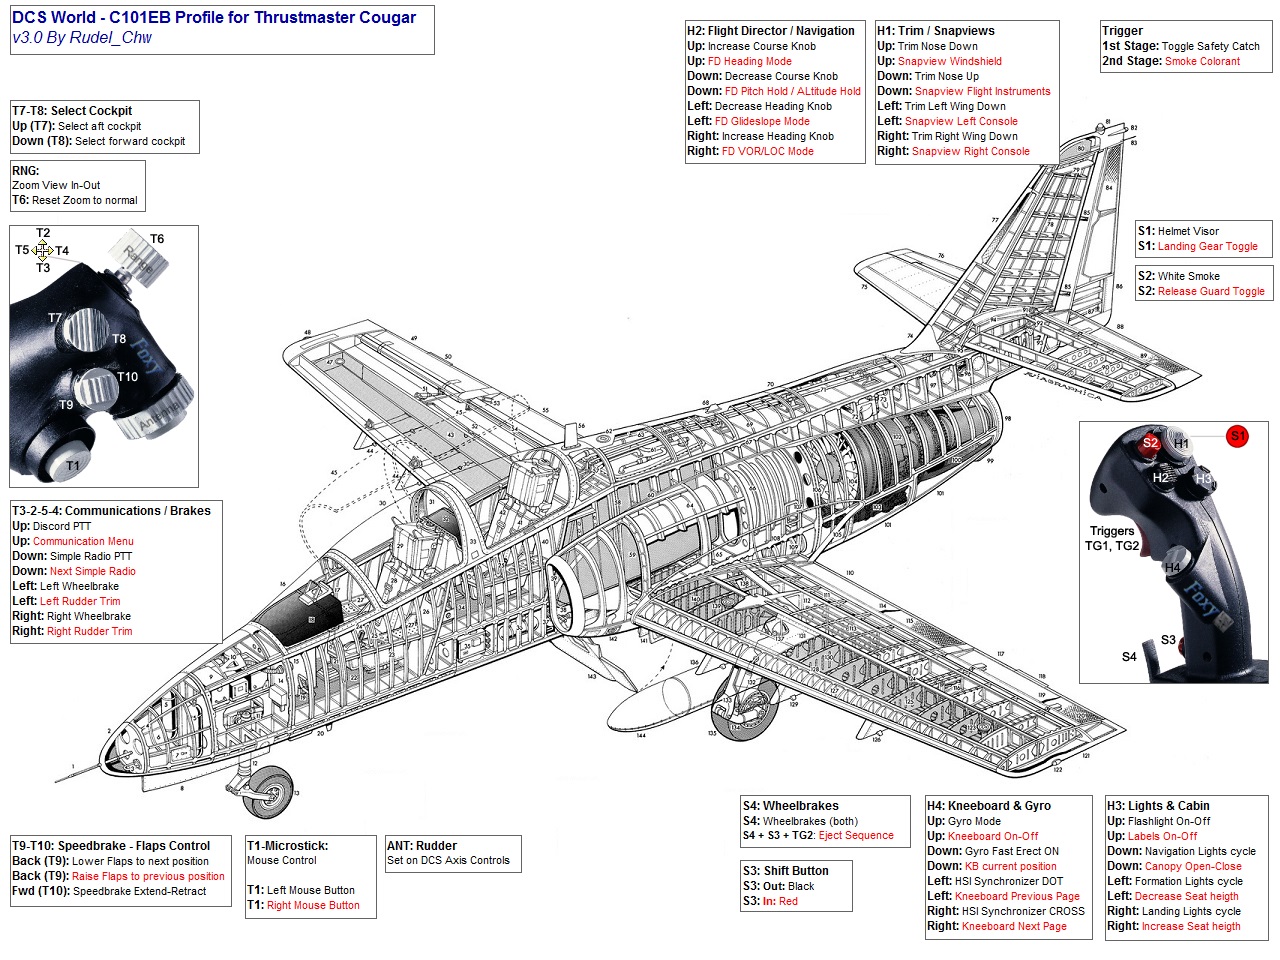 TM Hotas Cougar profile for DCS C-101EB